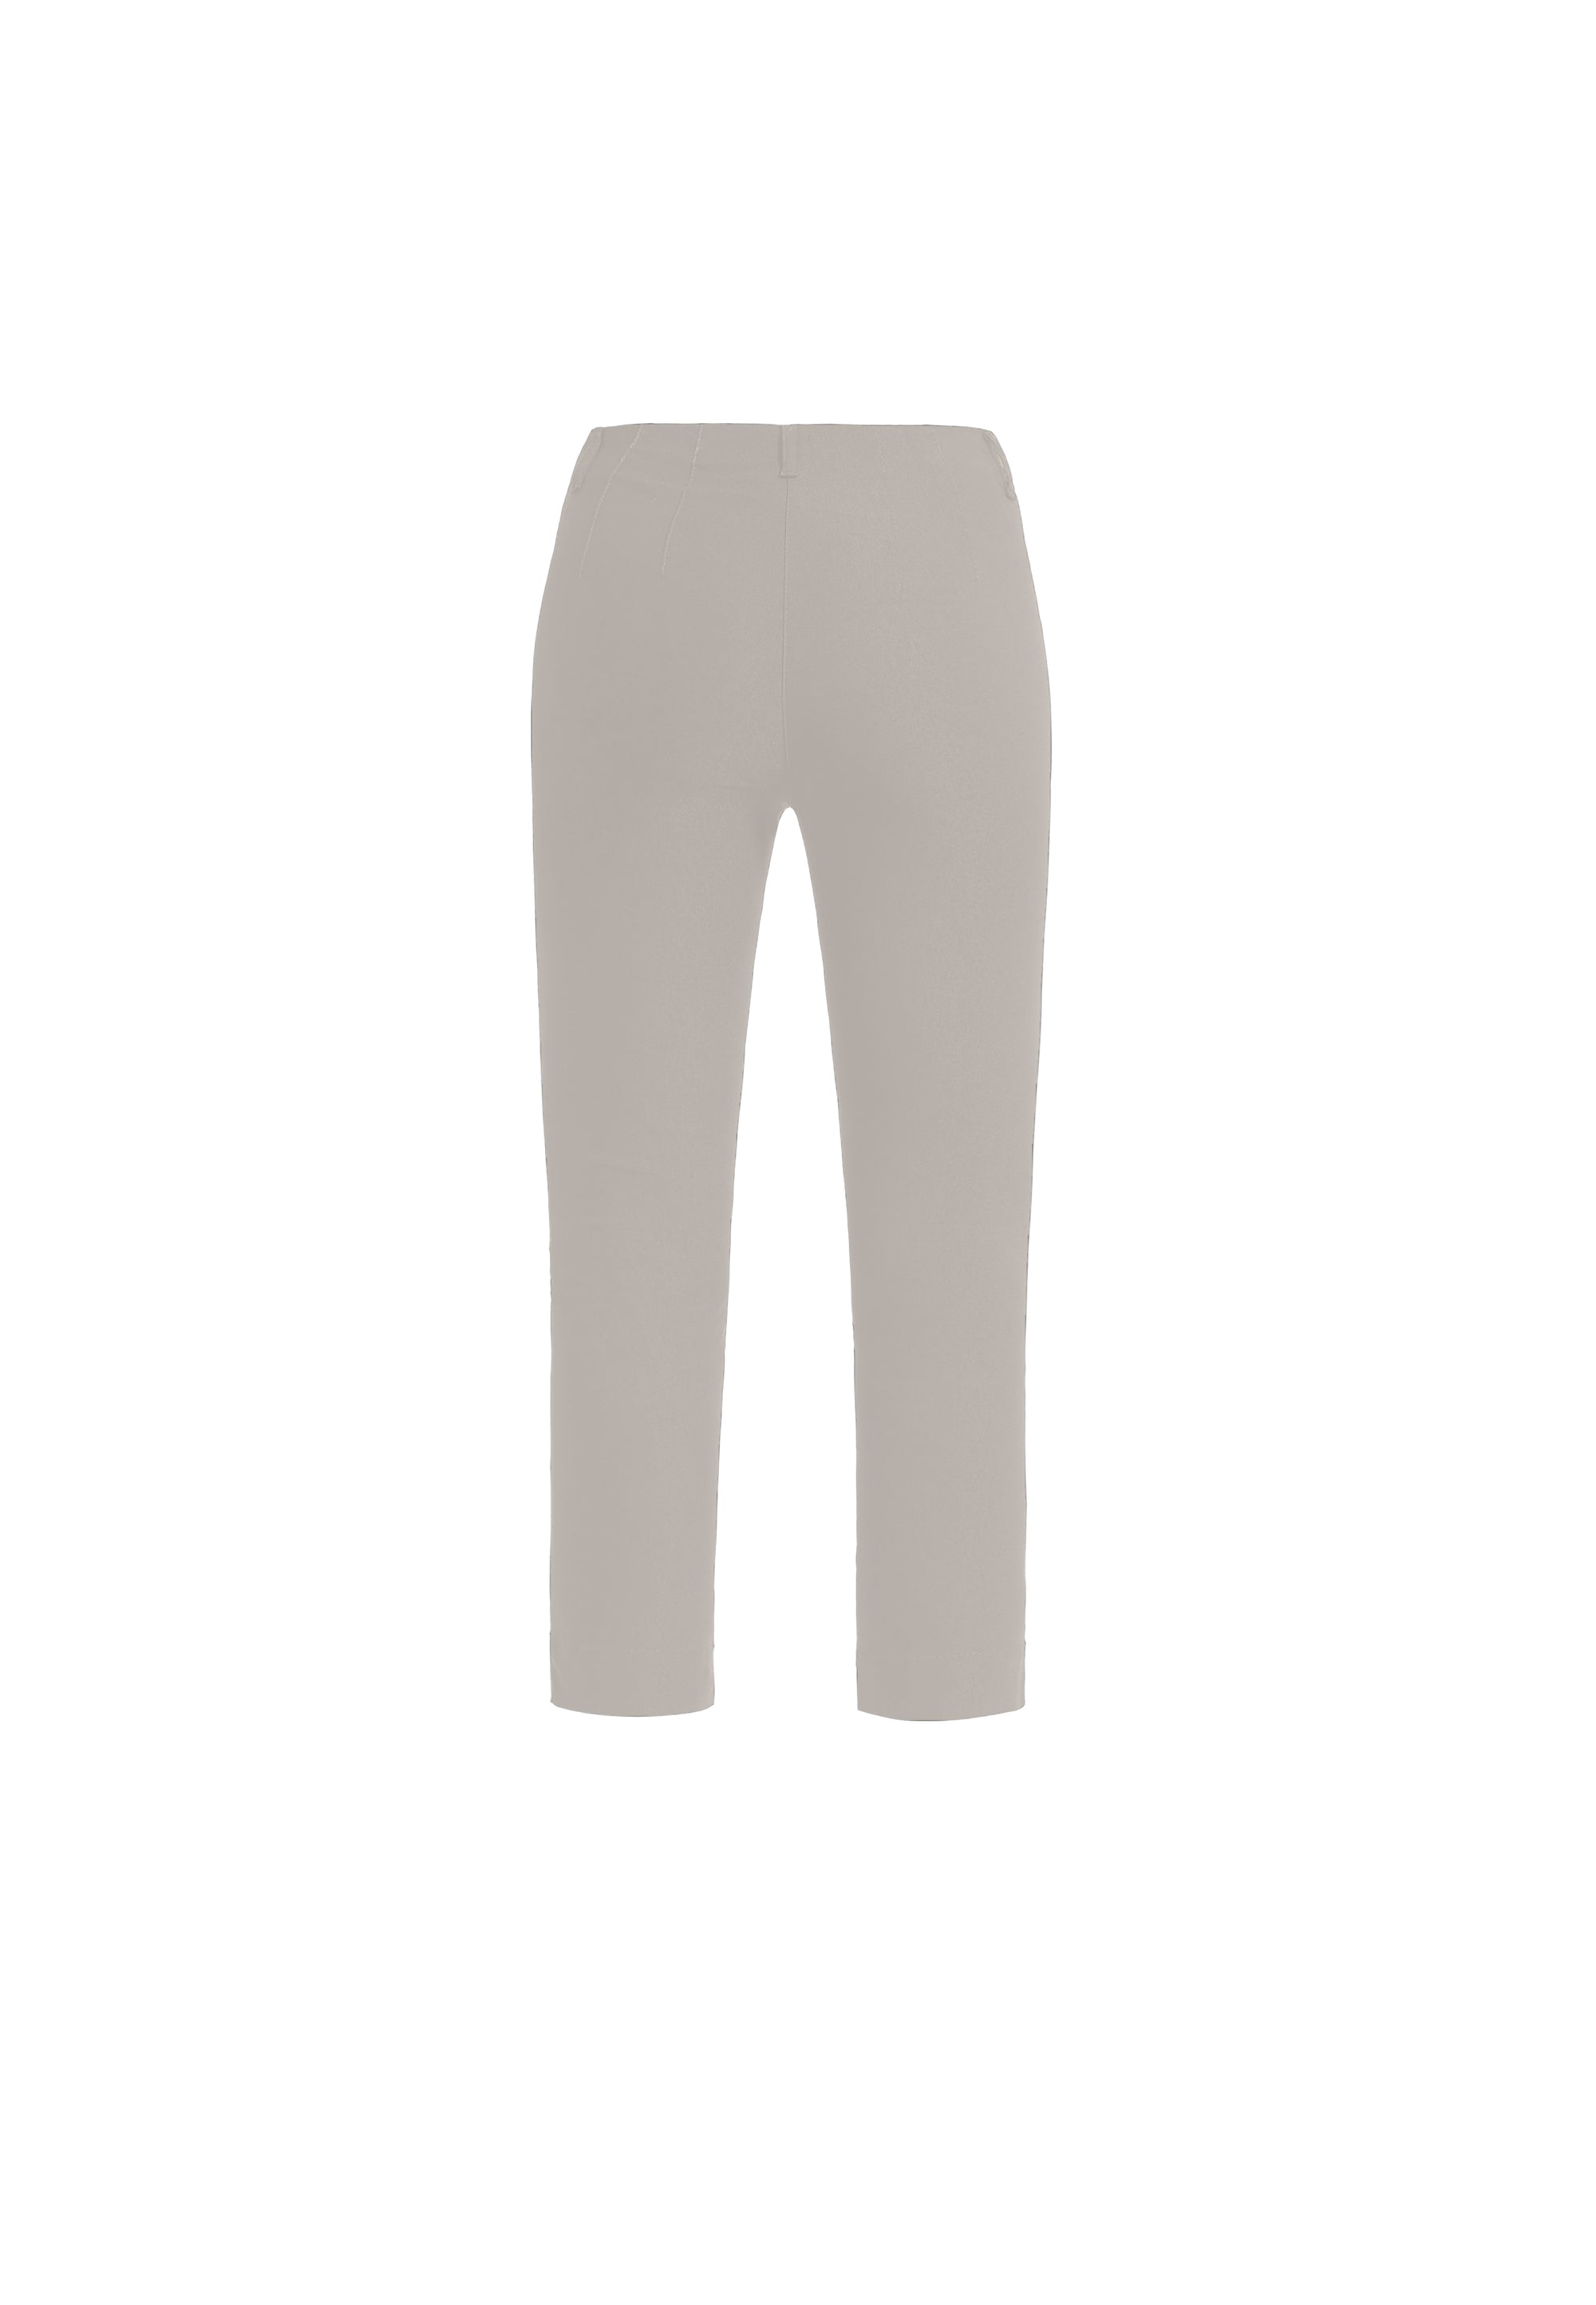 LAURIE Taylor Regular Crop Trousers REGULAR 25000 Grey Sand